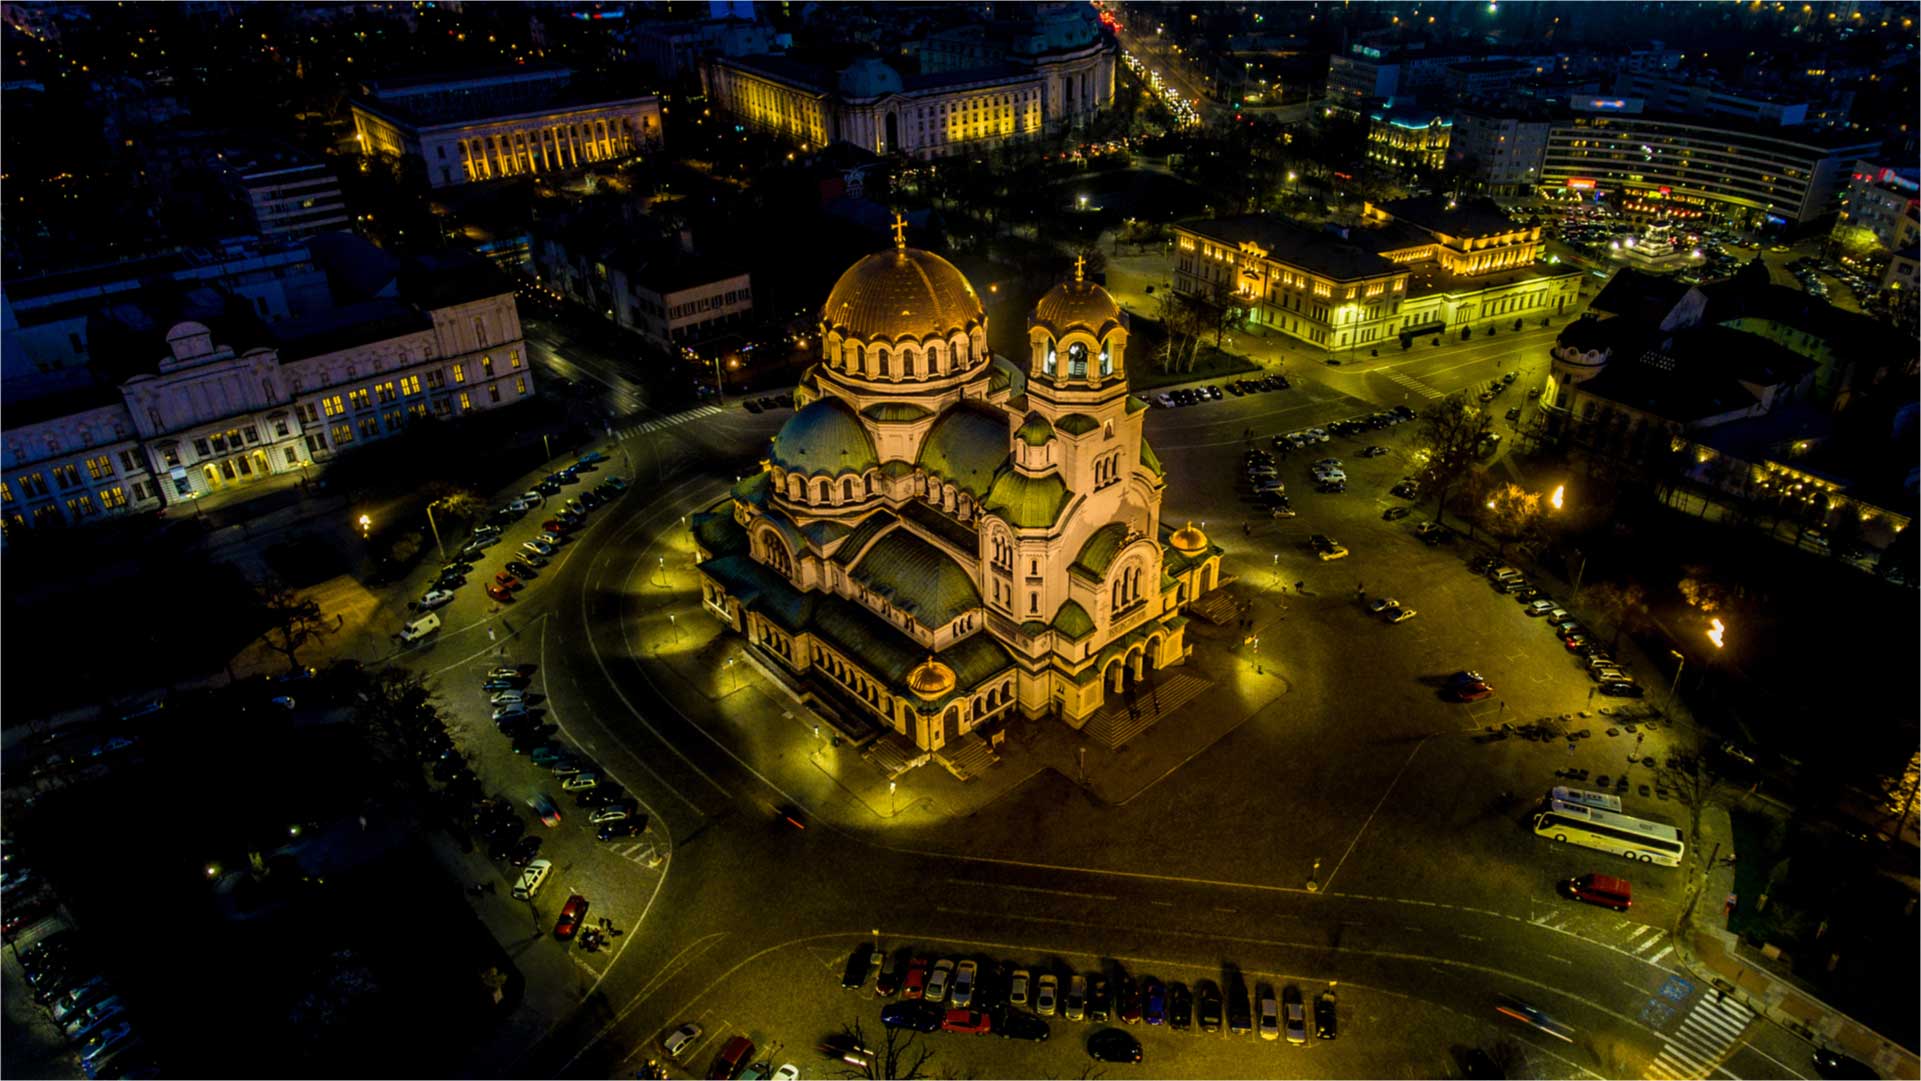 Bulgaria: Sofia